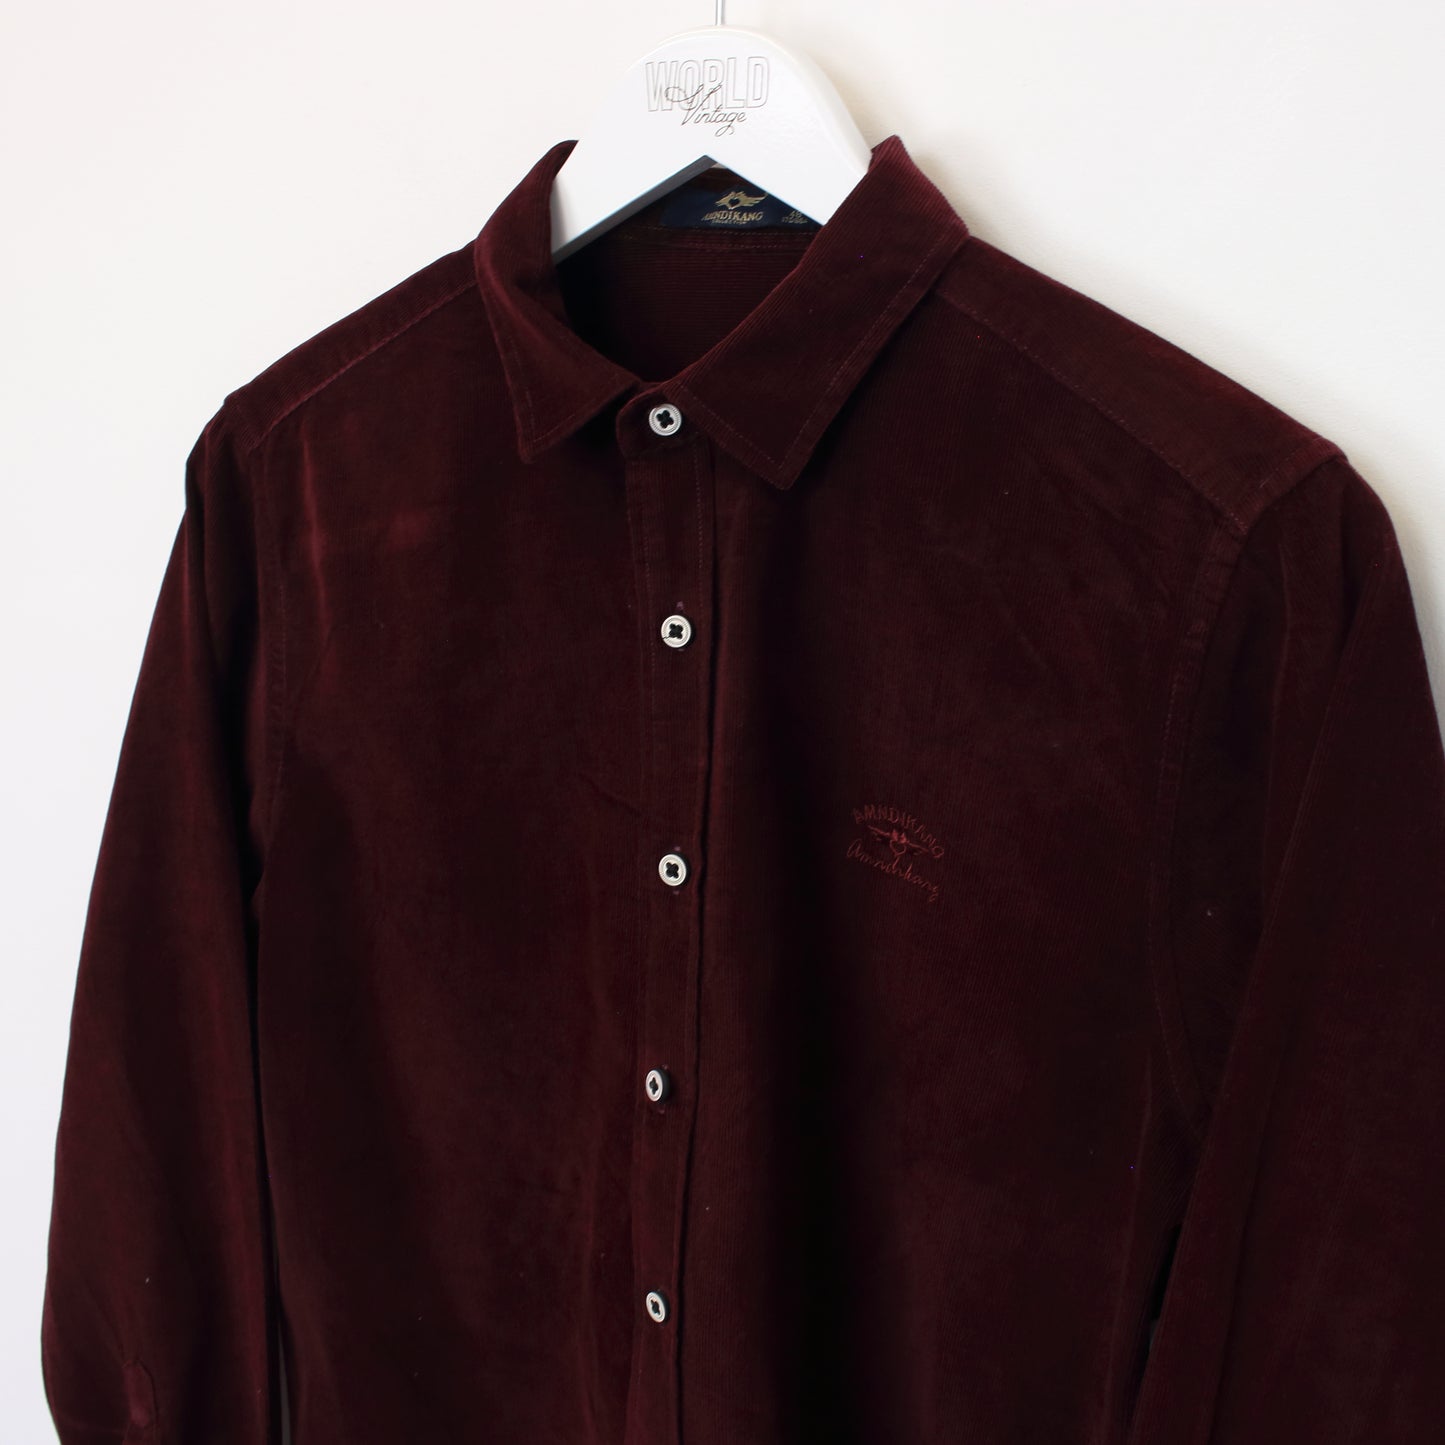 Vintage Amdikang shirt in burgundy. Best fits S